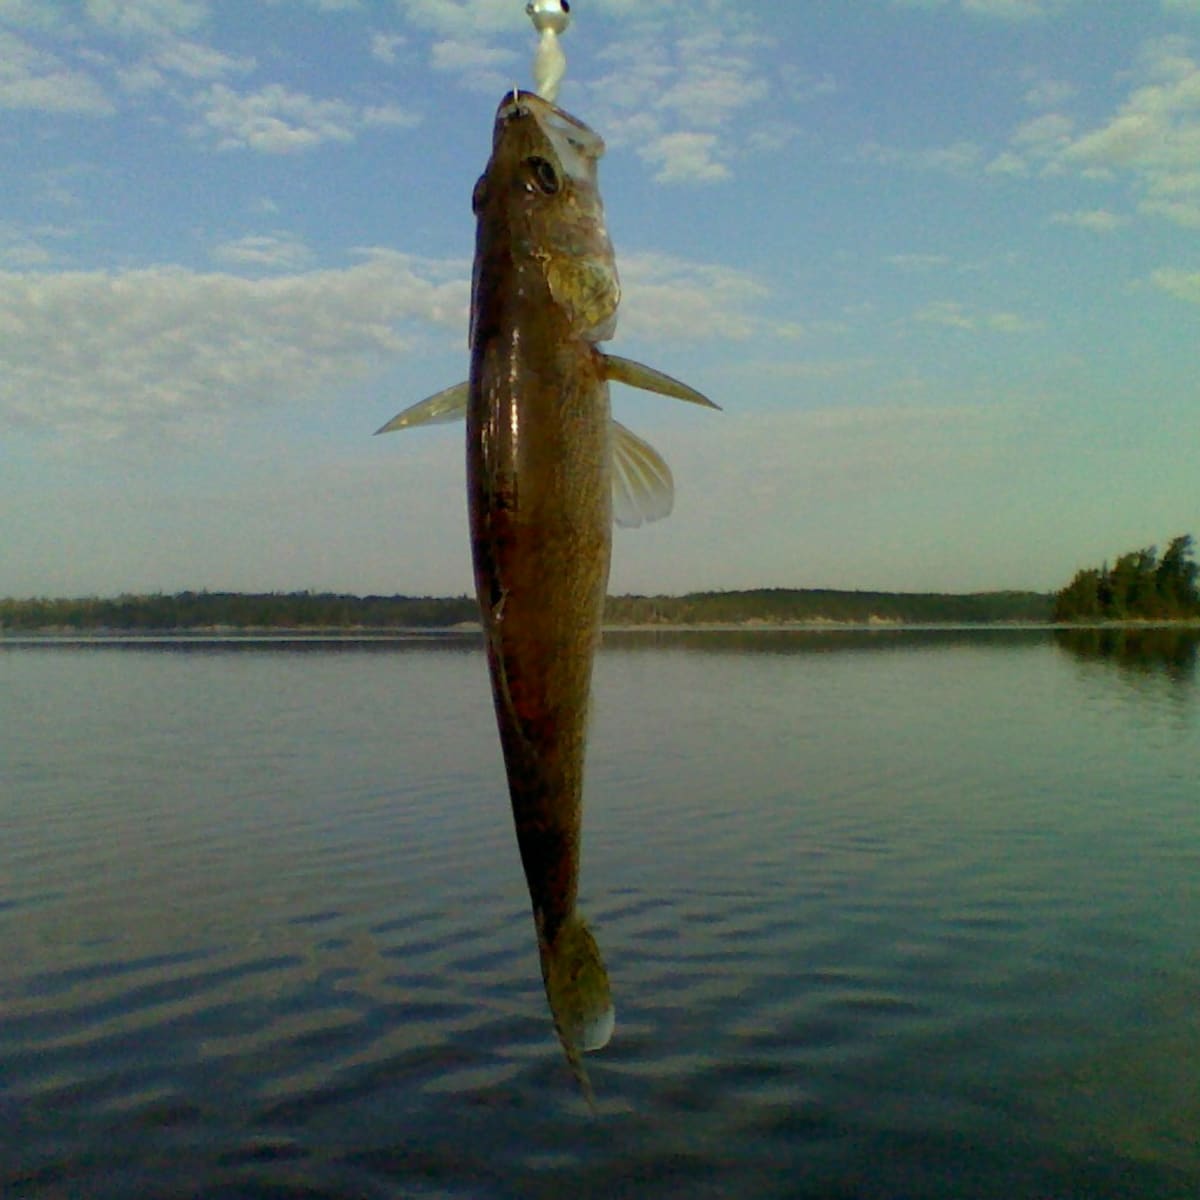 OROOTL Nylon Fishing Line Monofilament Fishing Line Abrasion Resistant Carp Fishing Line for Saltwater or Freshwater 